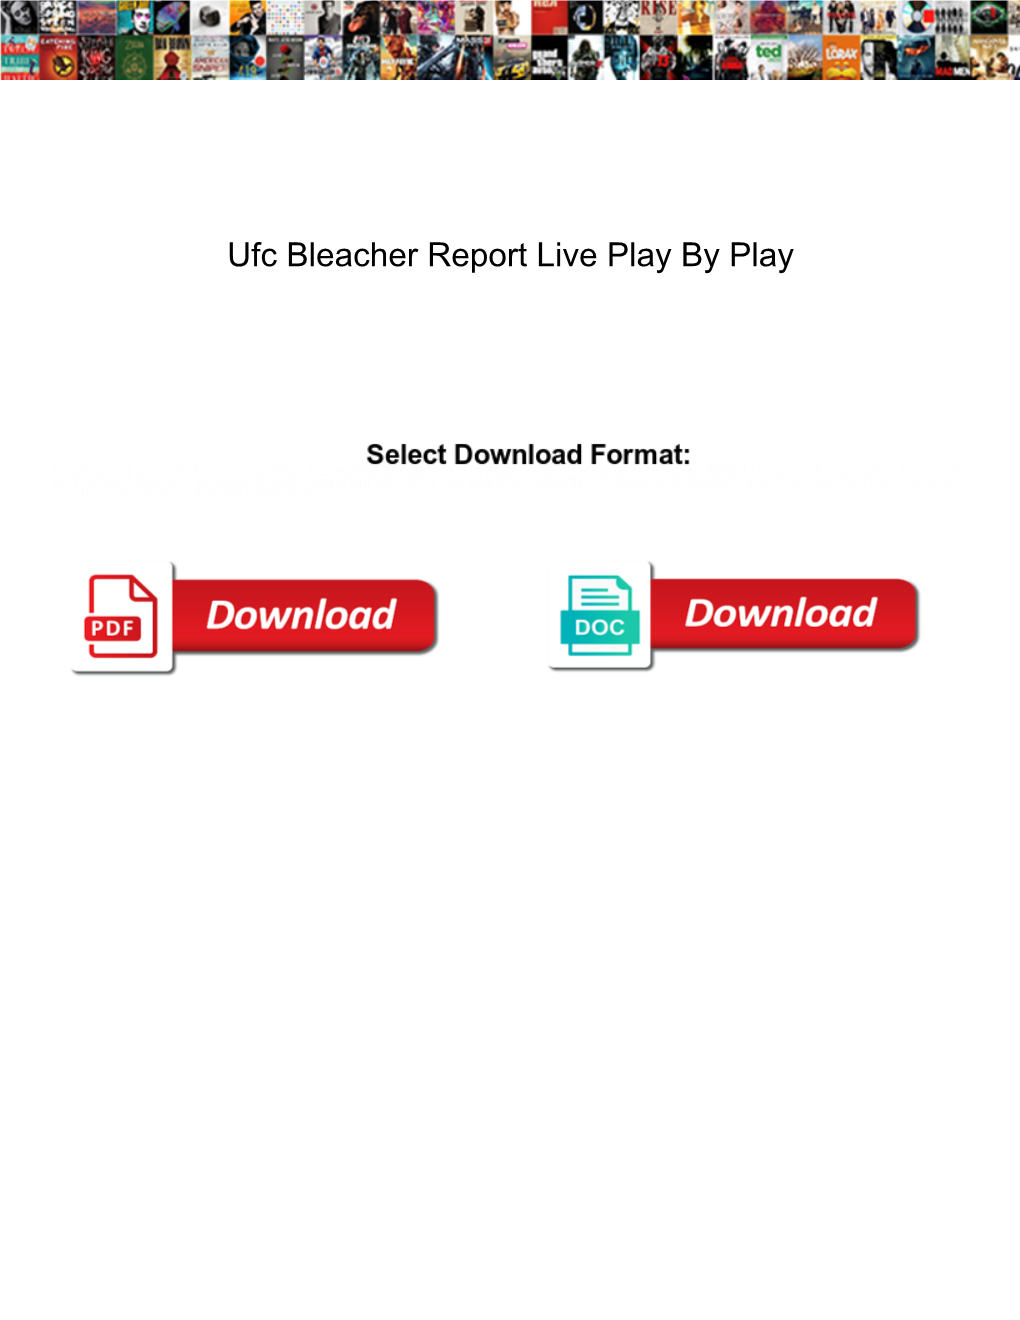 Ufc Bleacher Report Live Play by Play